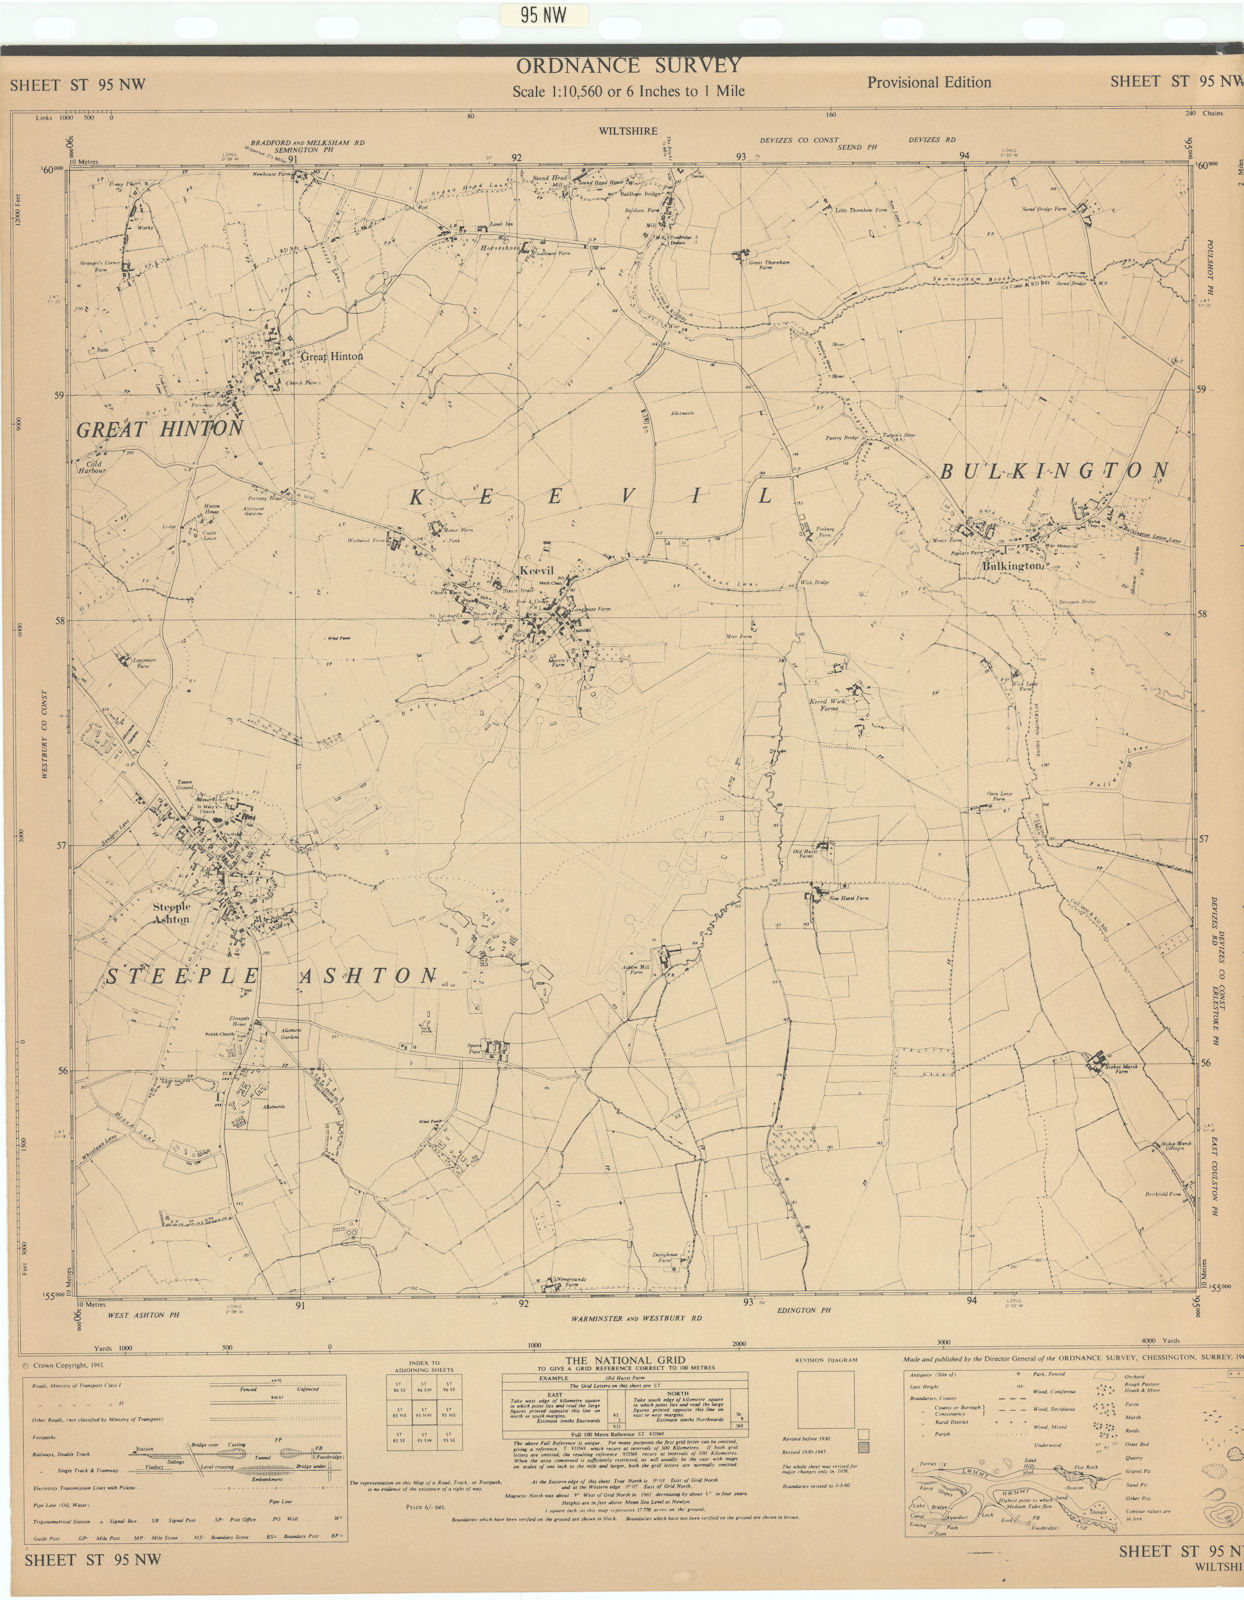 Ordnance Survey ST95NW Wiltshire Steeple Ashton Keevil Great Hinton 1961 map